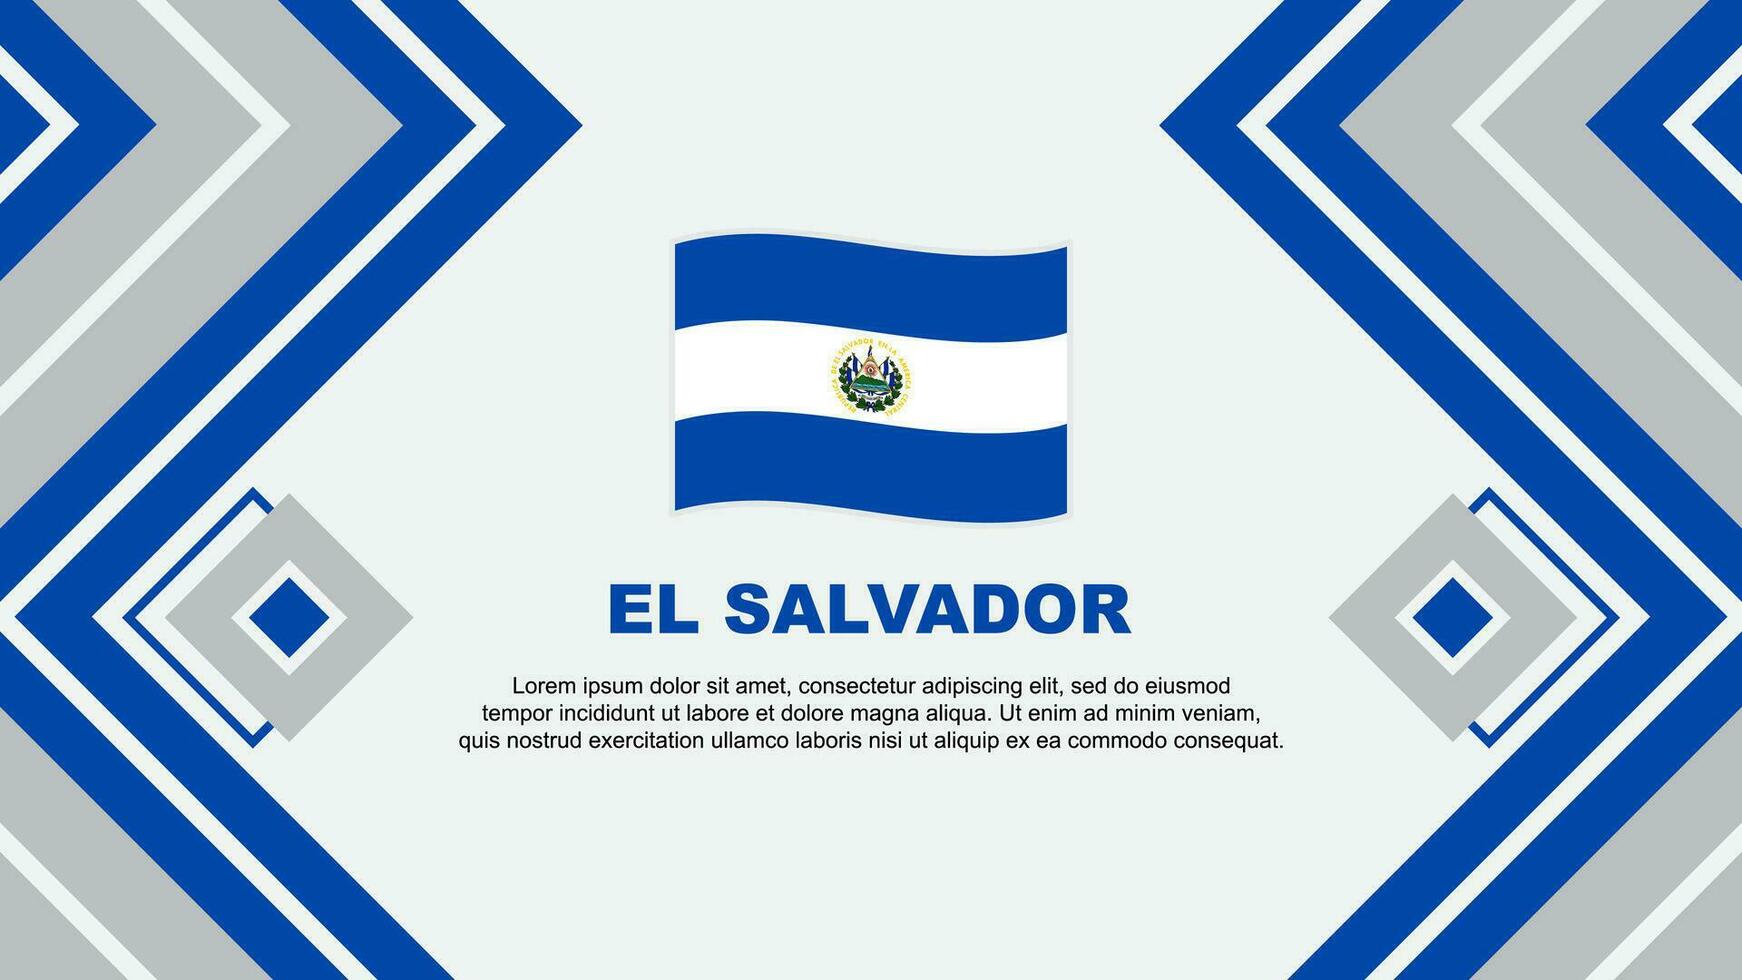 El Salvador Flag Abstract Background Design Template. El Salvador Independence Day Banner Wallpaper Vector Illustration. El Salvador Design